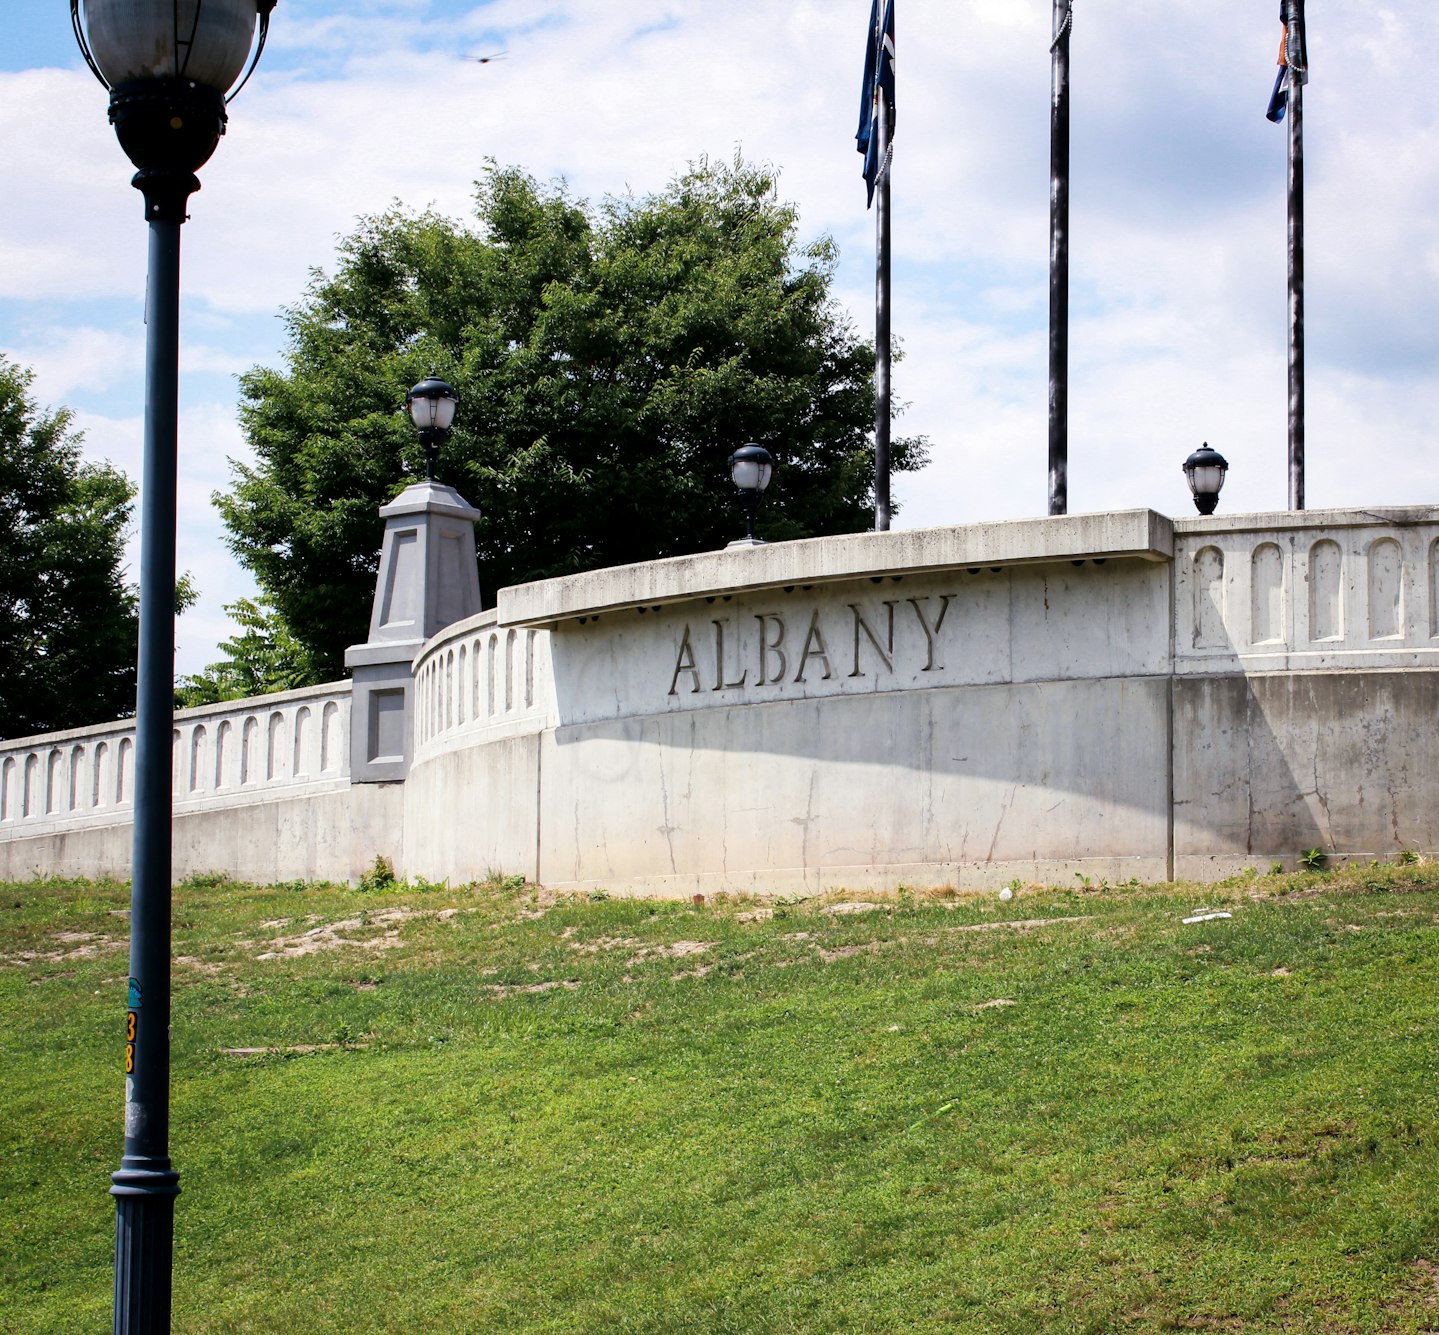 Albany image